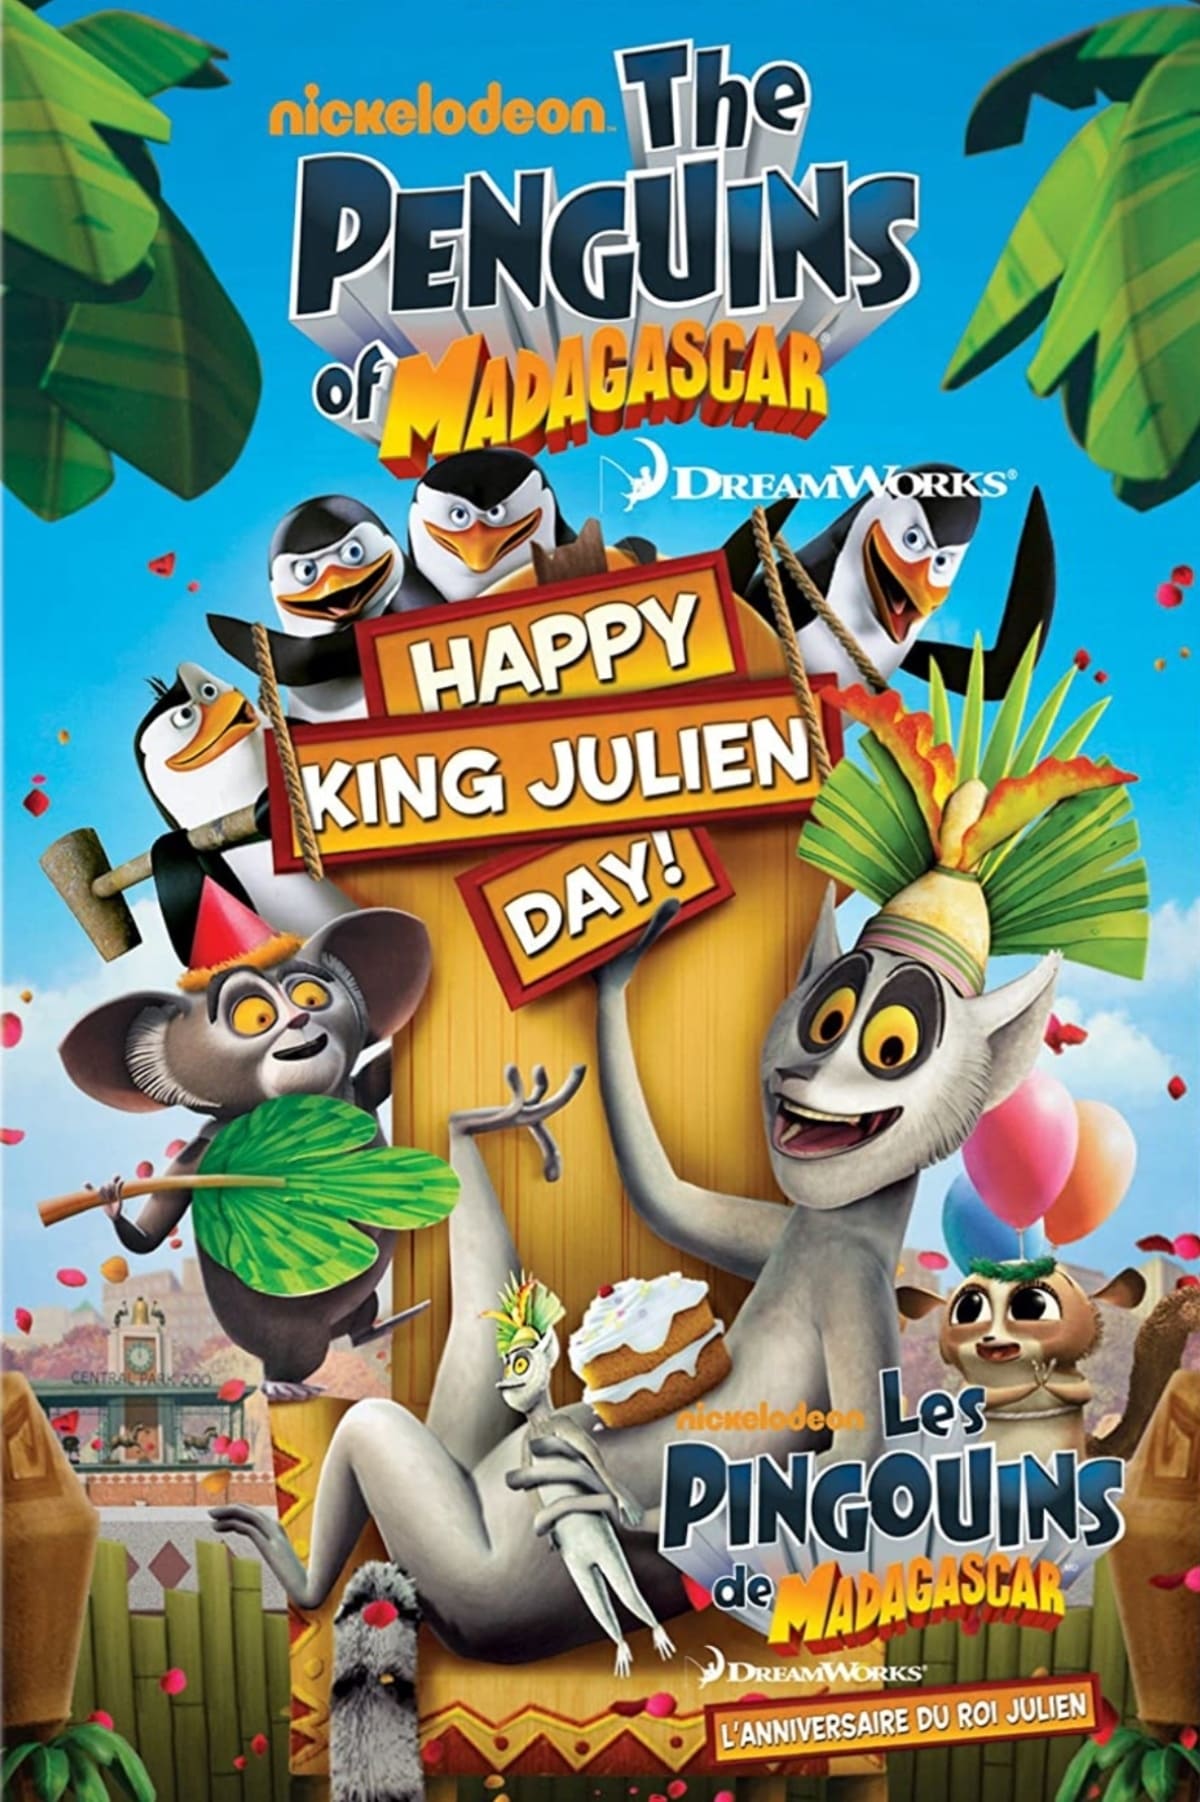 The Penguins of Madagascar: Happy King Julien Day (2010)